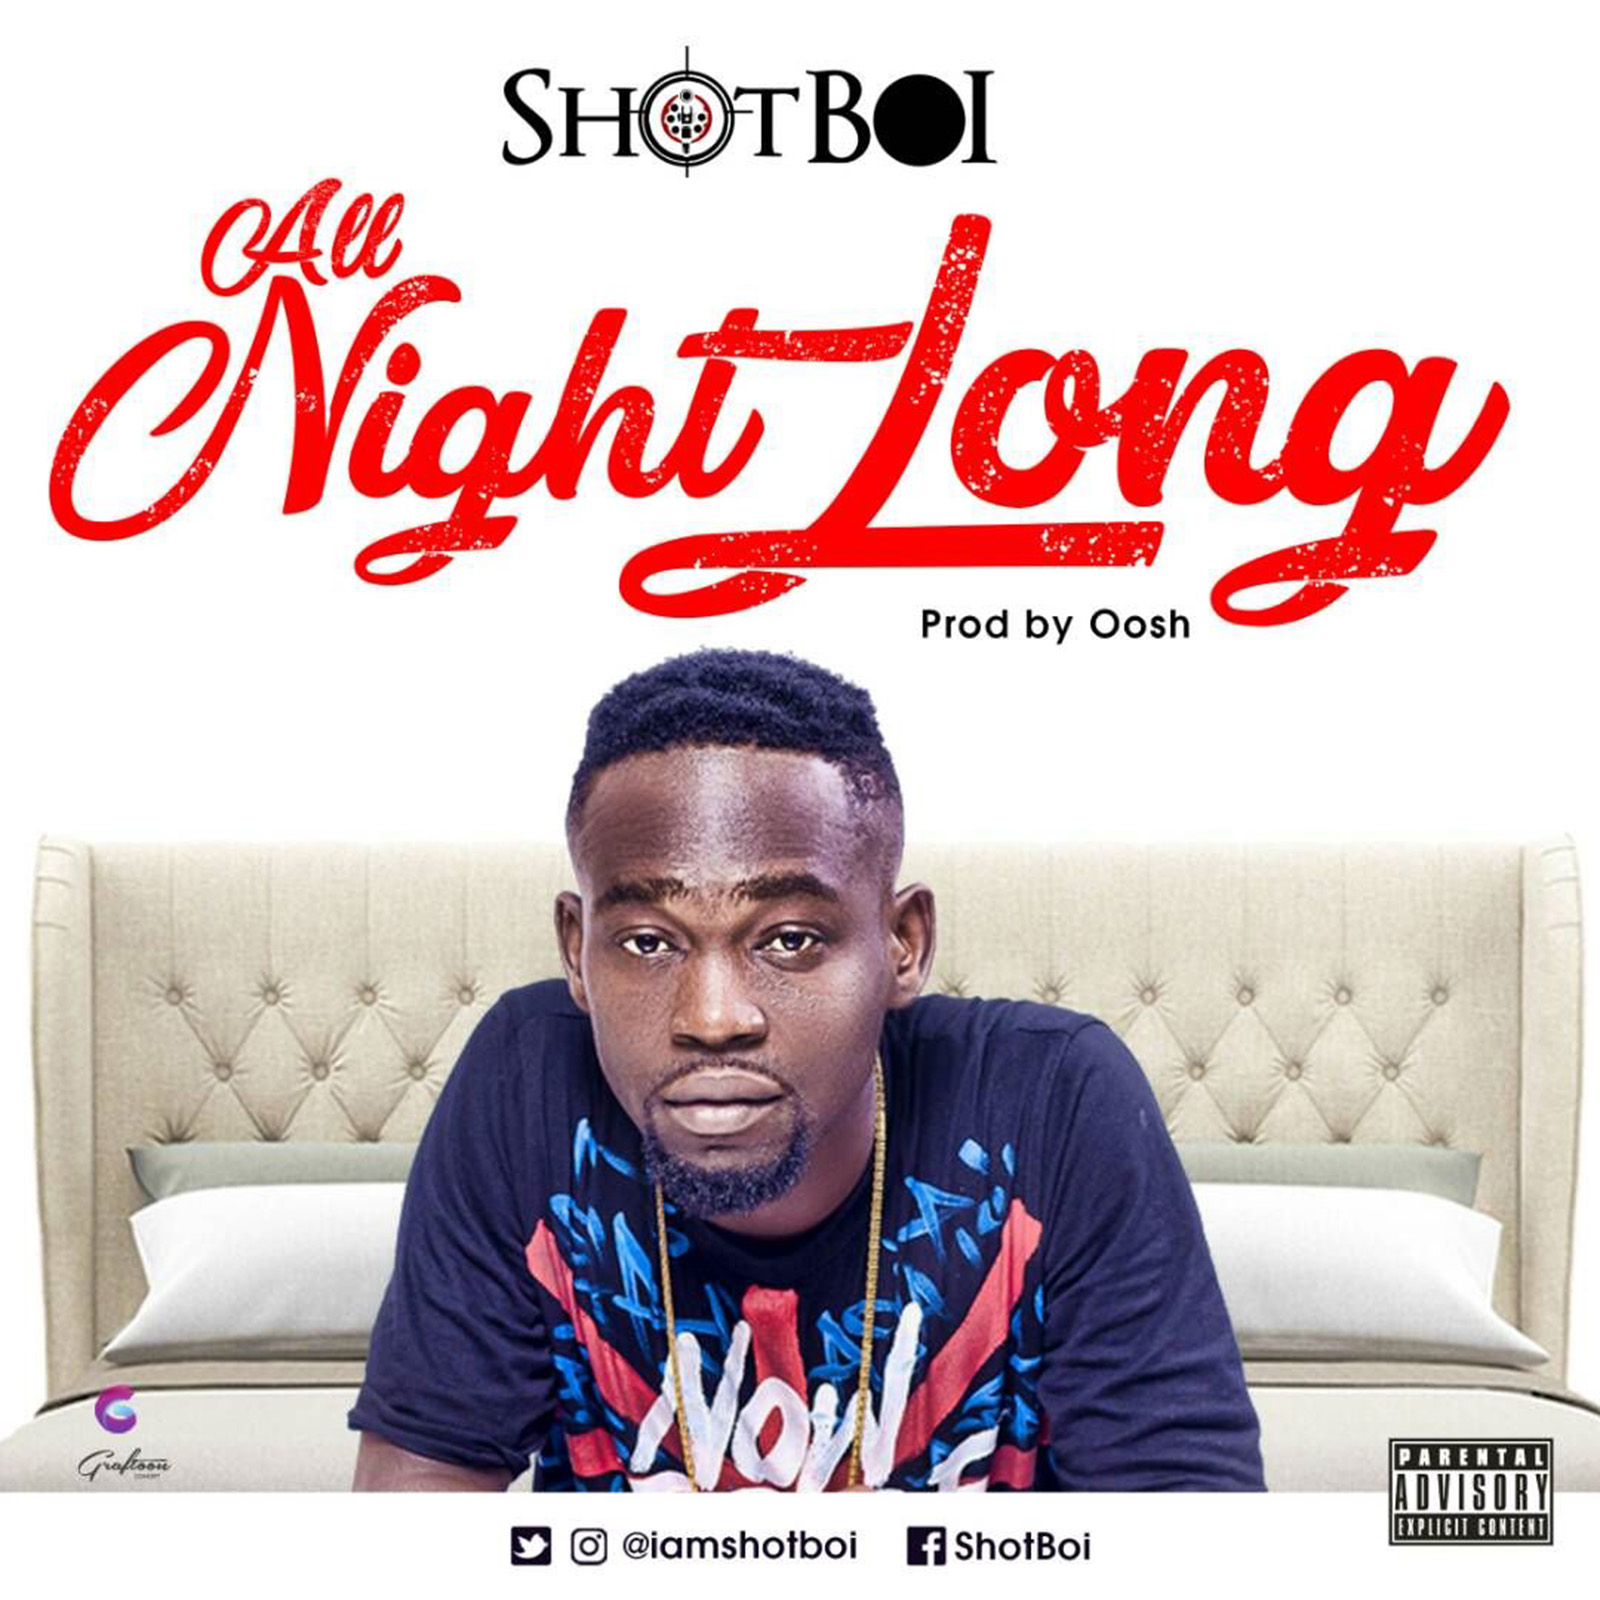 All Night Long by ShotBoi